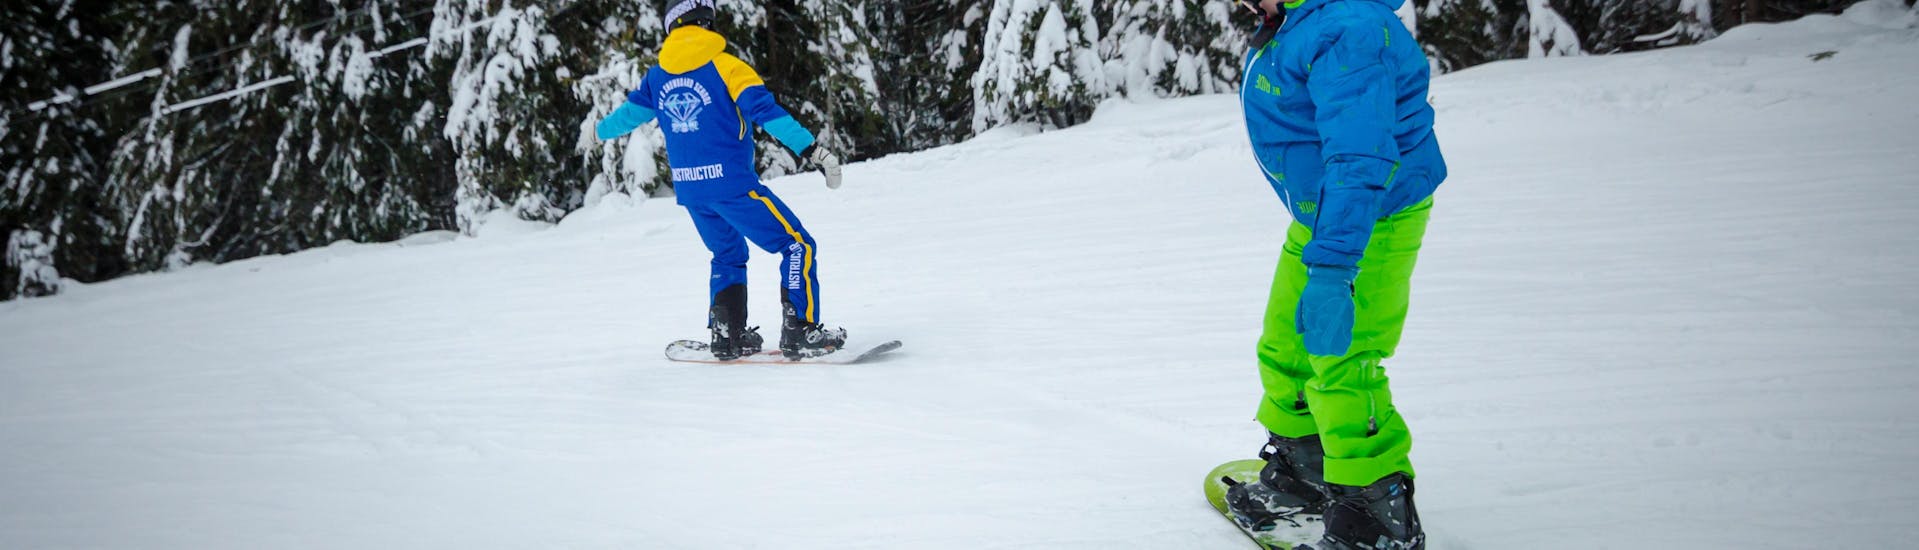 Private Snowboarding Lessons for Kids of All Levels with Crystal Ski  Demänovská Dolina - Hero image